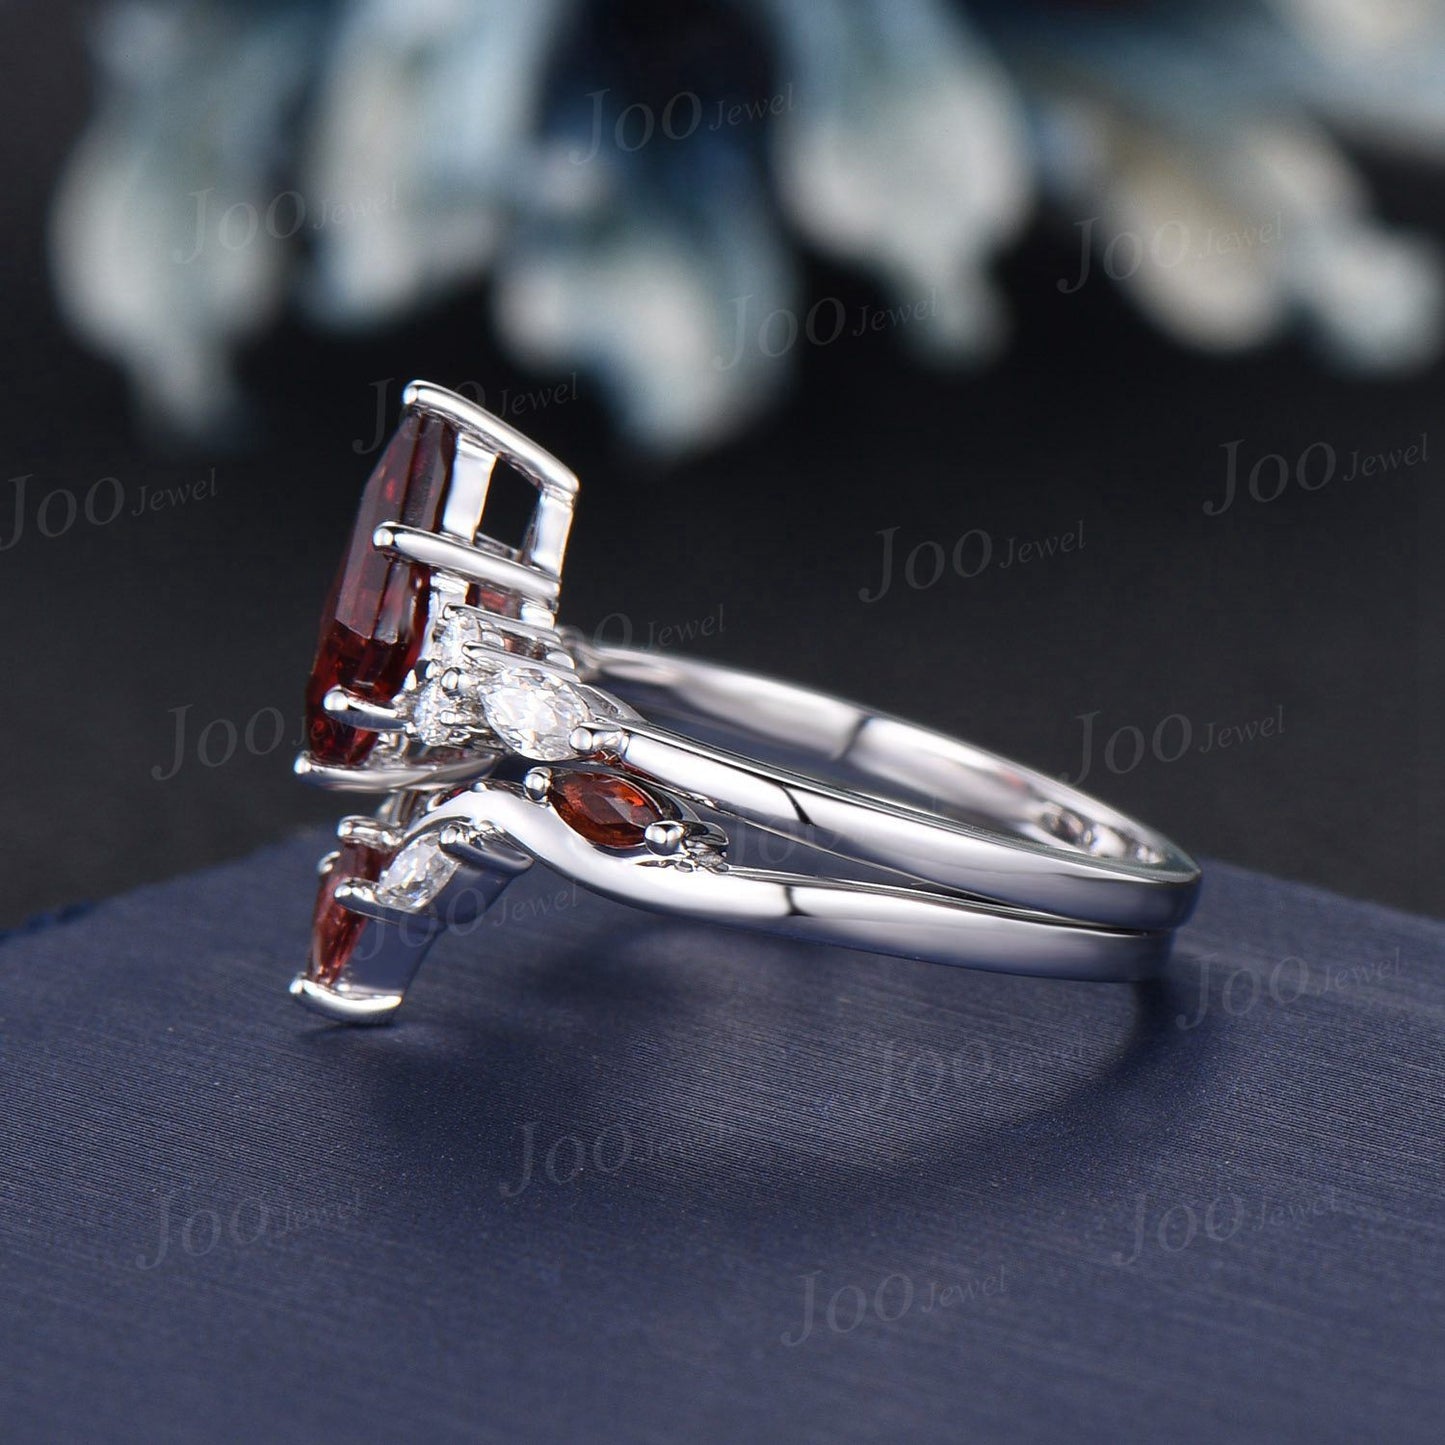 Natural Garnet Moissanite Engagement Ring Set Red Gemstone Kite Ring Set 10K Rose Gold January Birthstone Wedding Ring Vintage Promise Ring